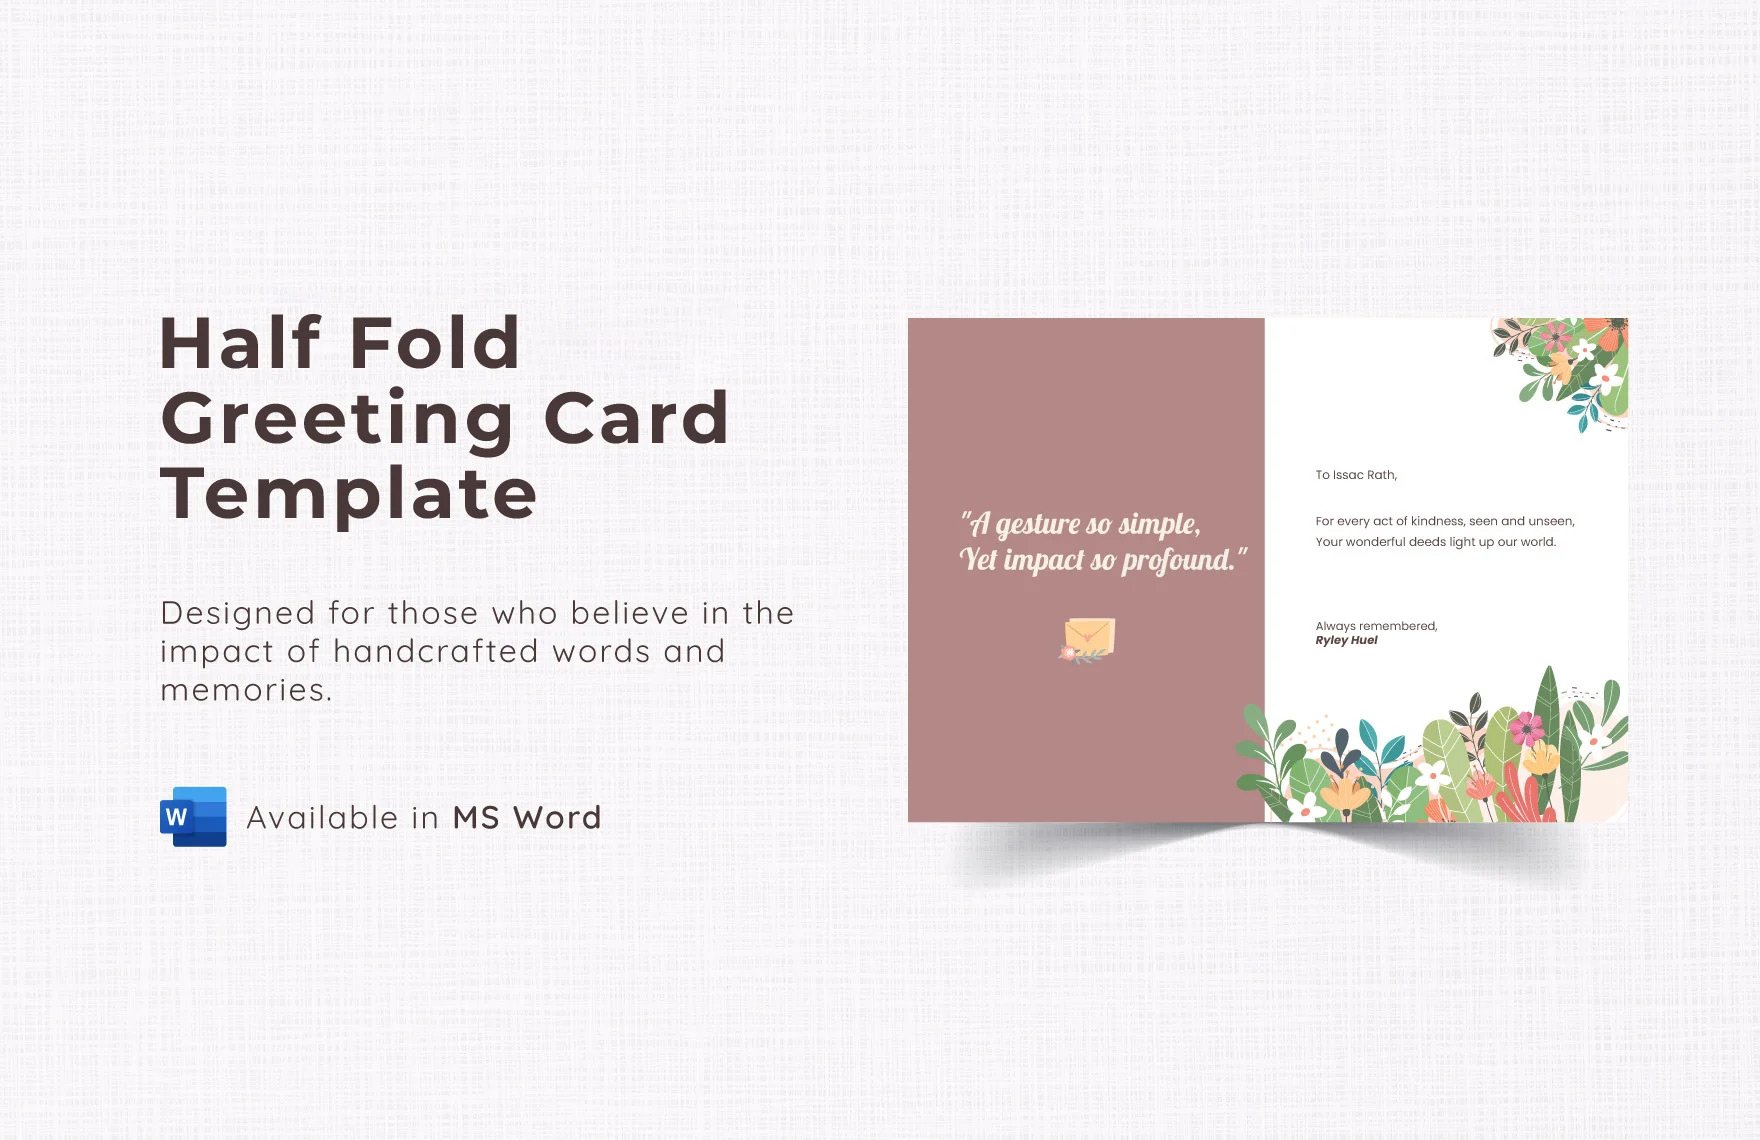 Half Fold Greeting Card Template